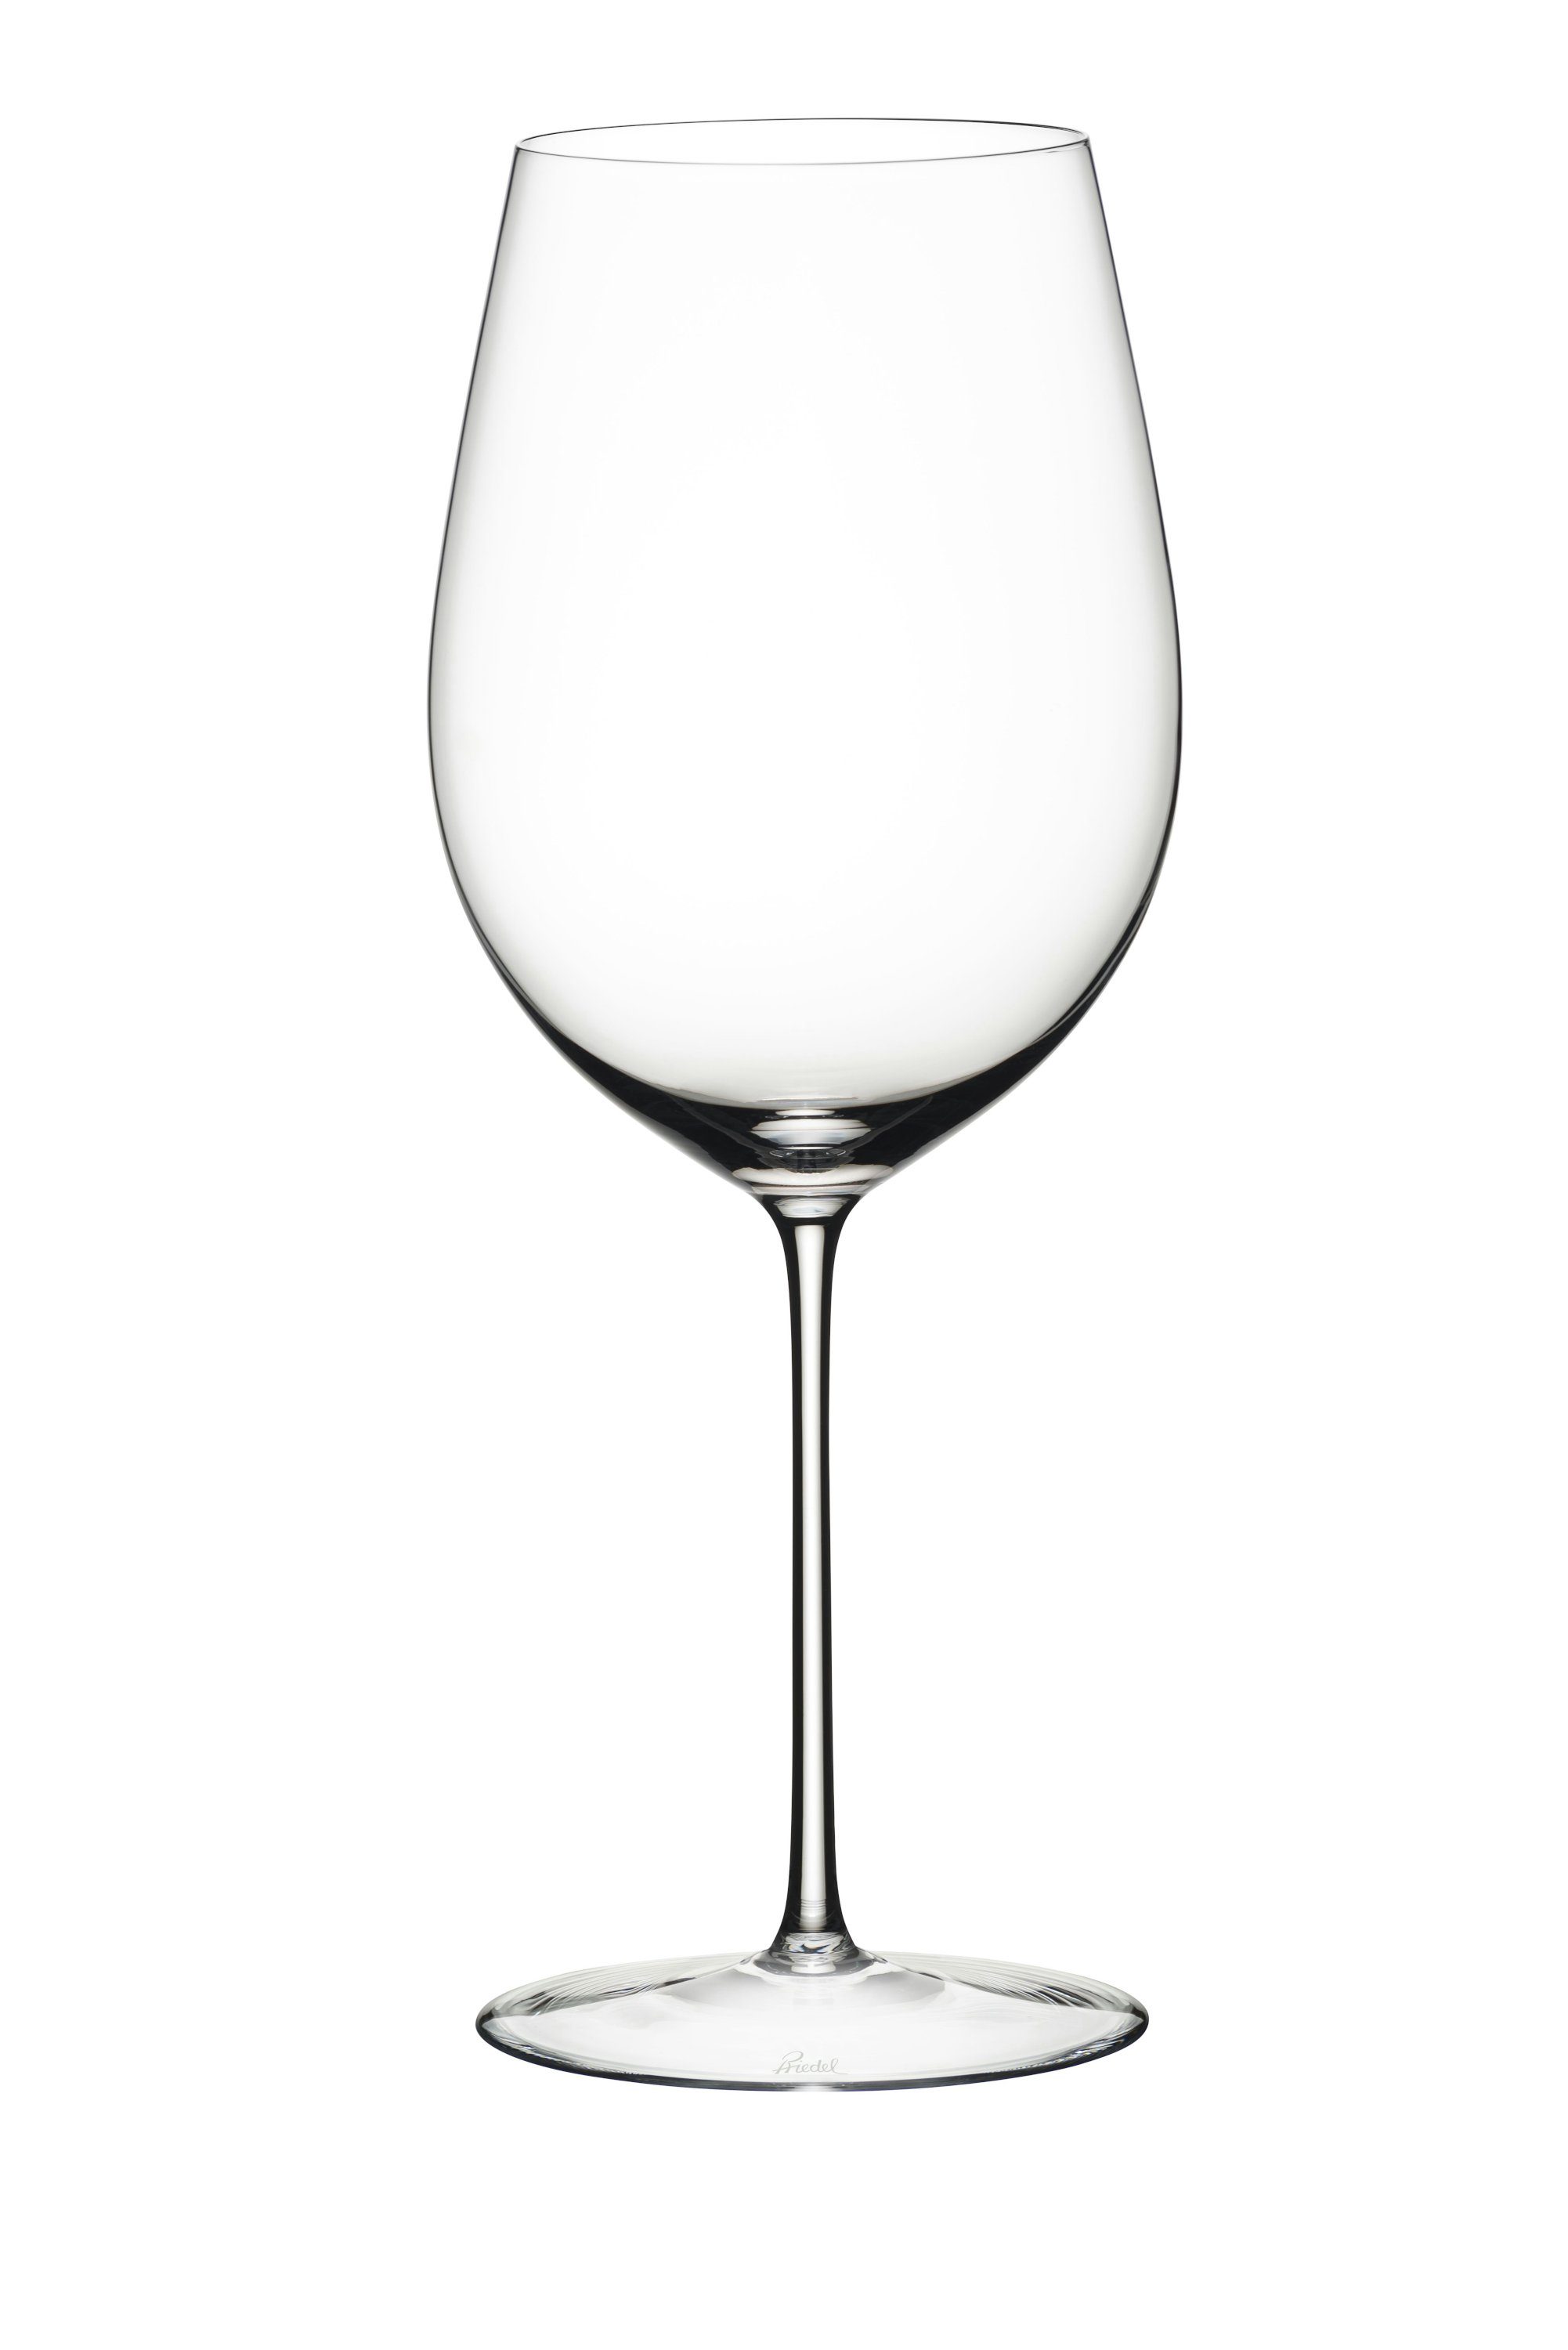 RIEDEL Cru, Grand Rotweinglas Sommeliers Bordeaux Glas Glas Riedel